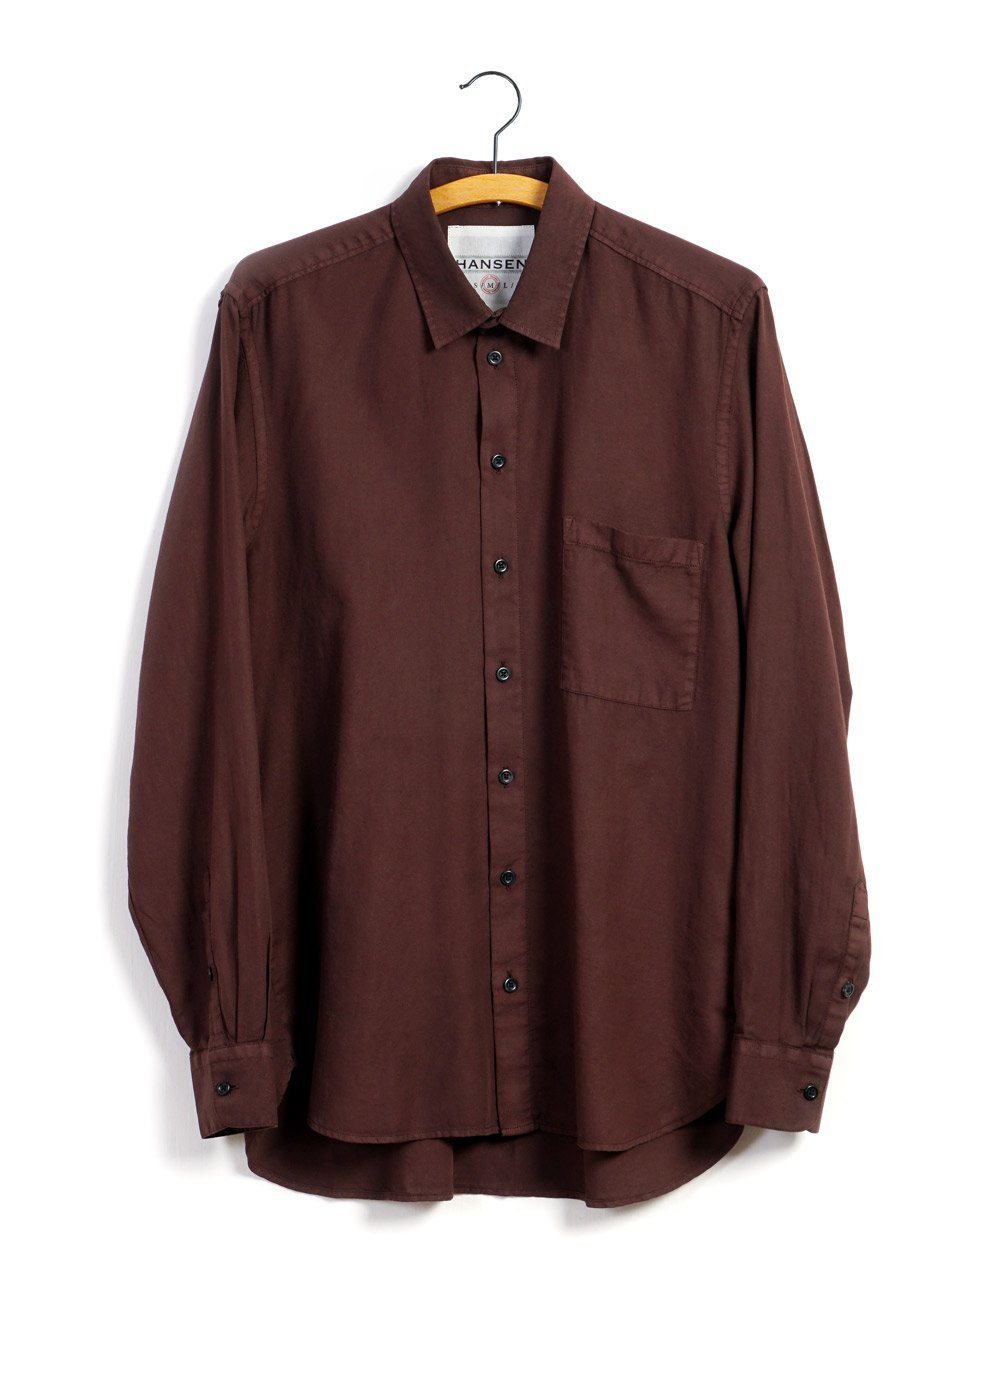 HANSEN Garments - HENNING | Casual Classic Shirt | Maroon - HANSEN Garments